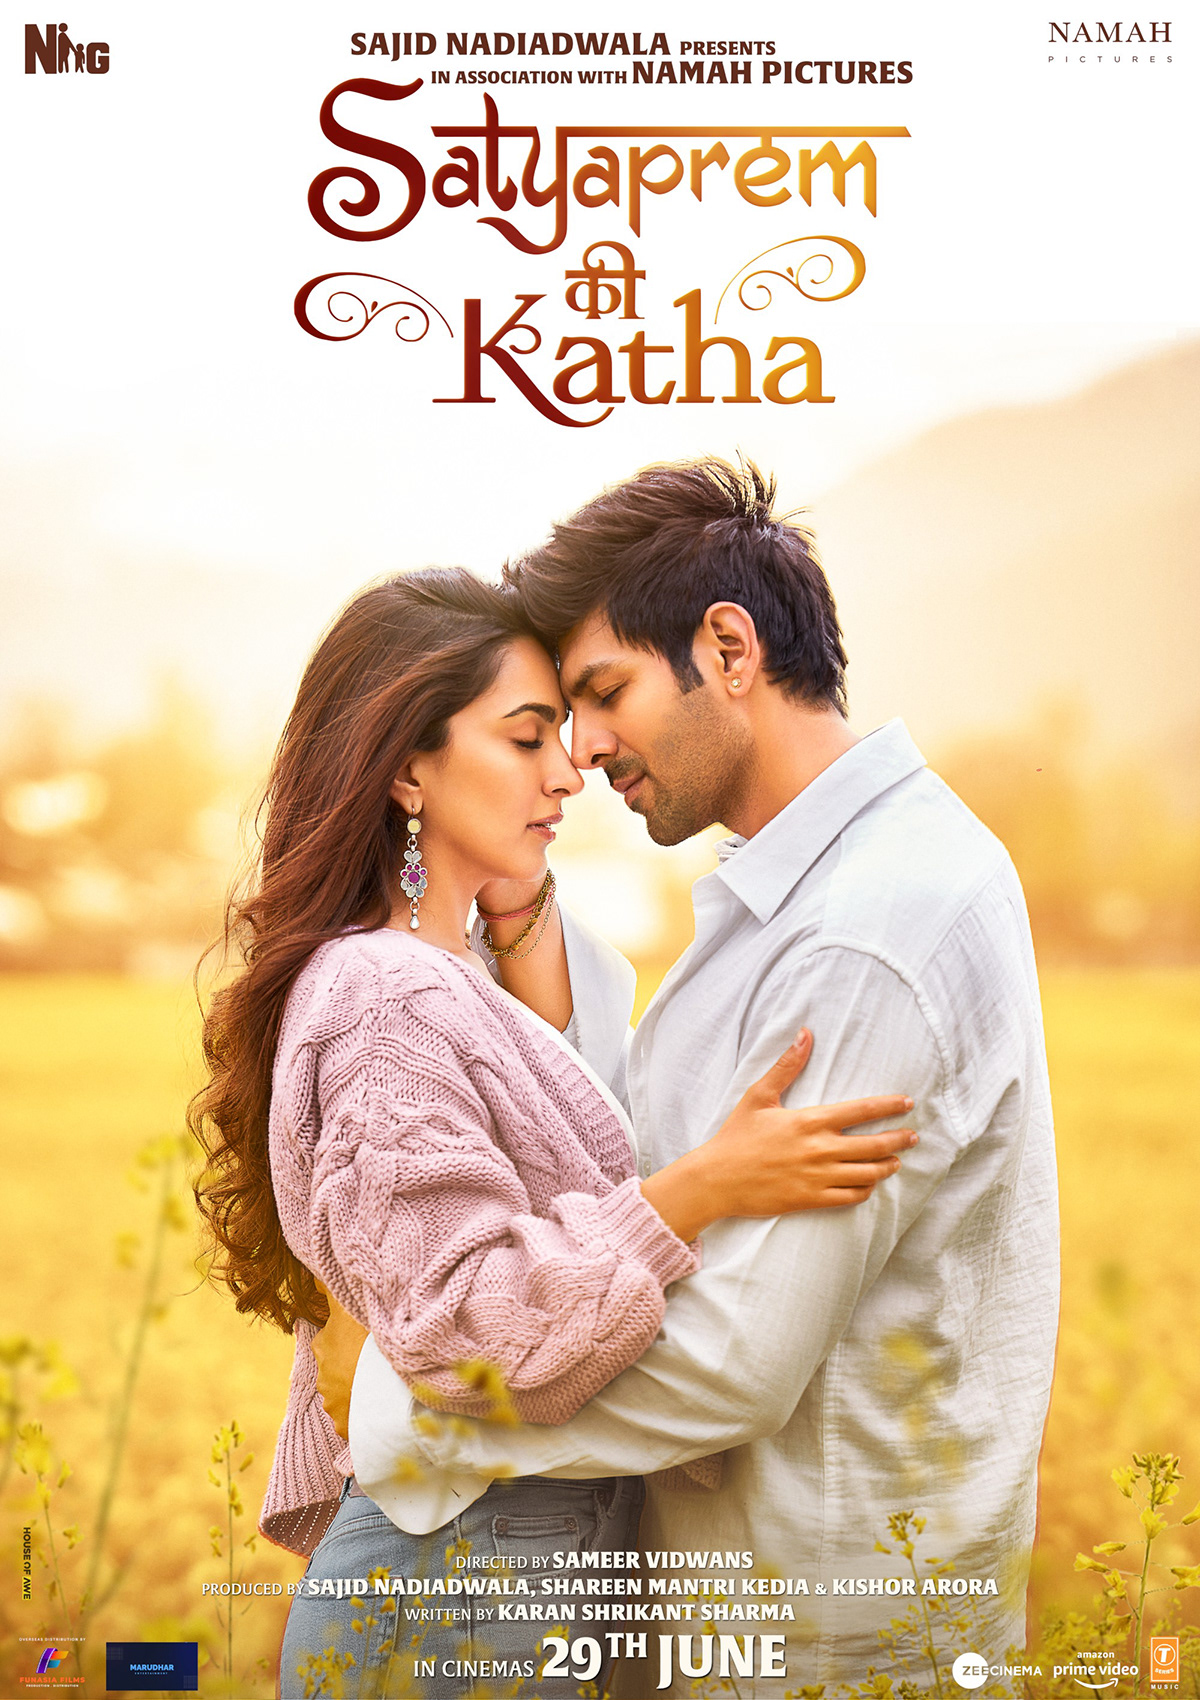 film poster netflix poster Bollywood Movie Poster Kartik Aaryan kiara advani couple campaign poster romantic Hollywood Poster